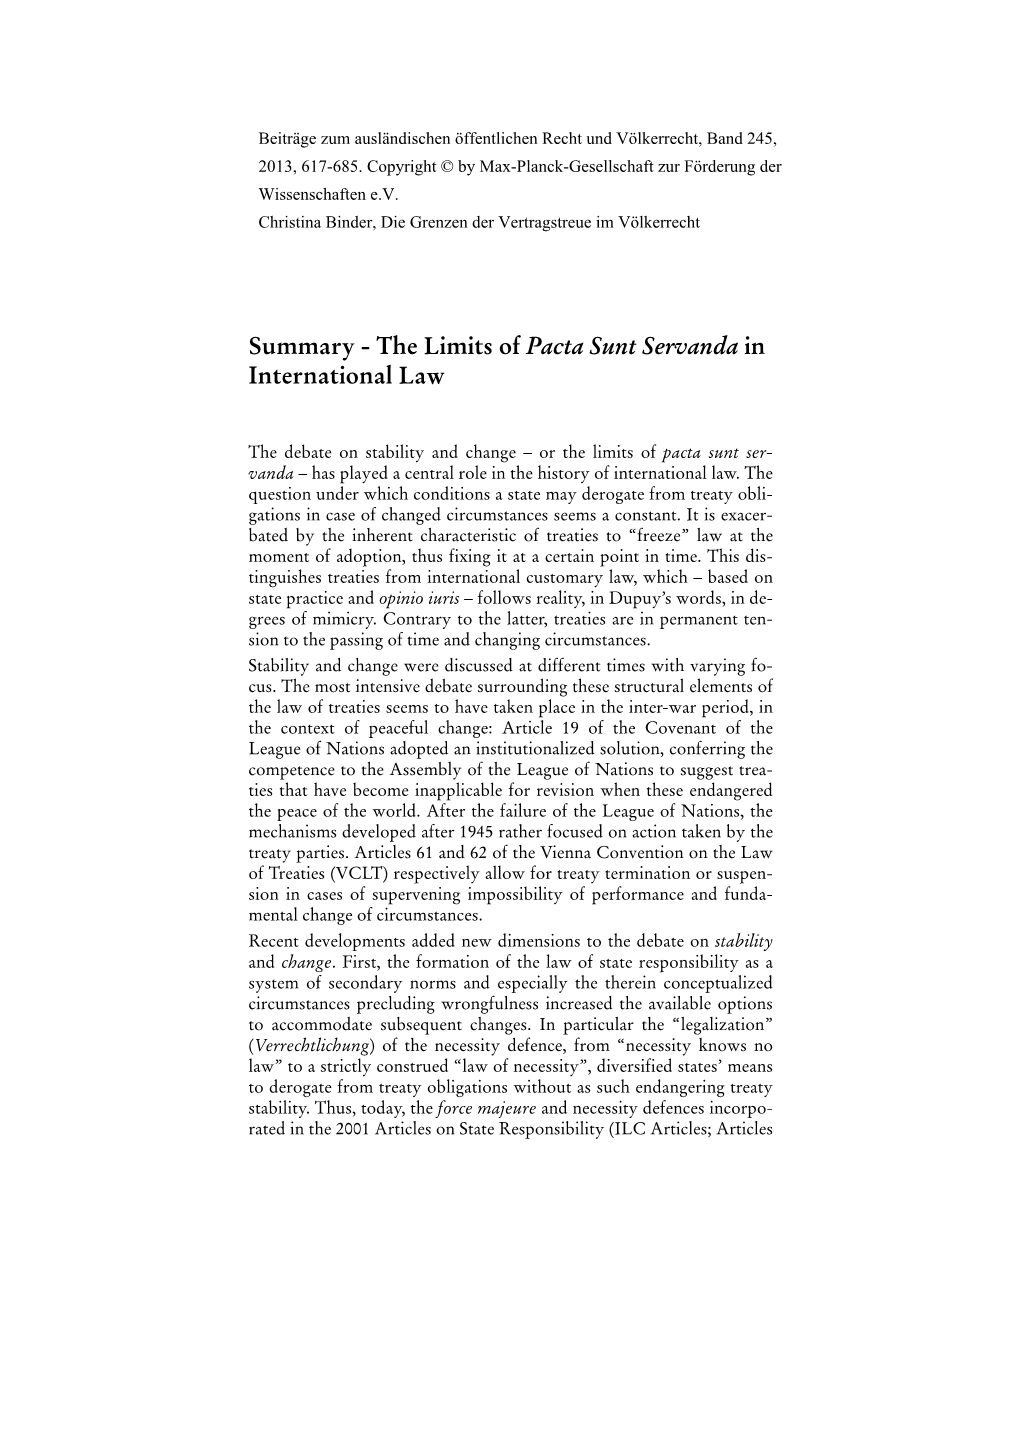 The Limits of Pacta Sunt Servanda in International Law